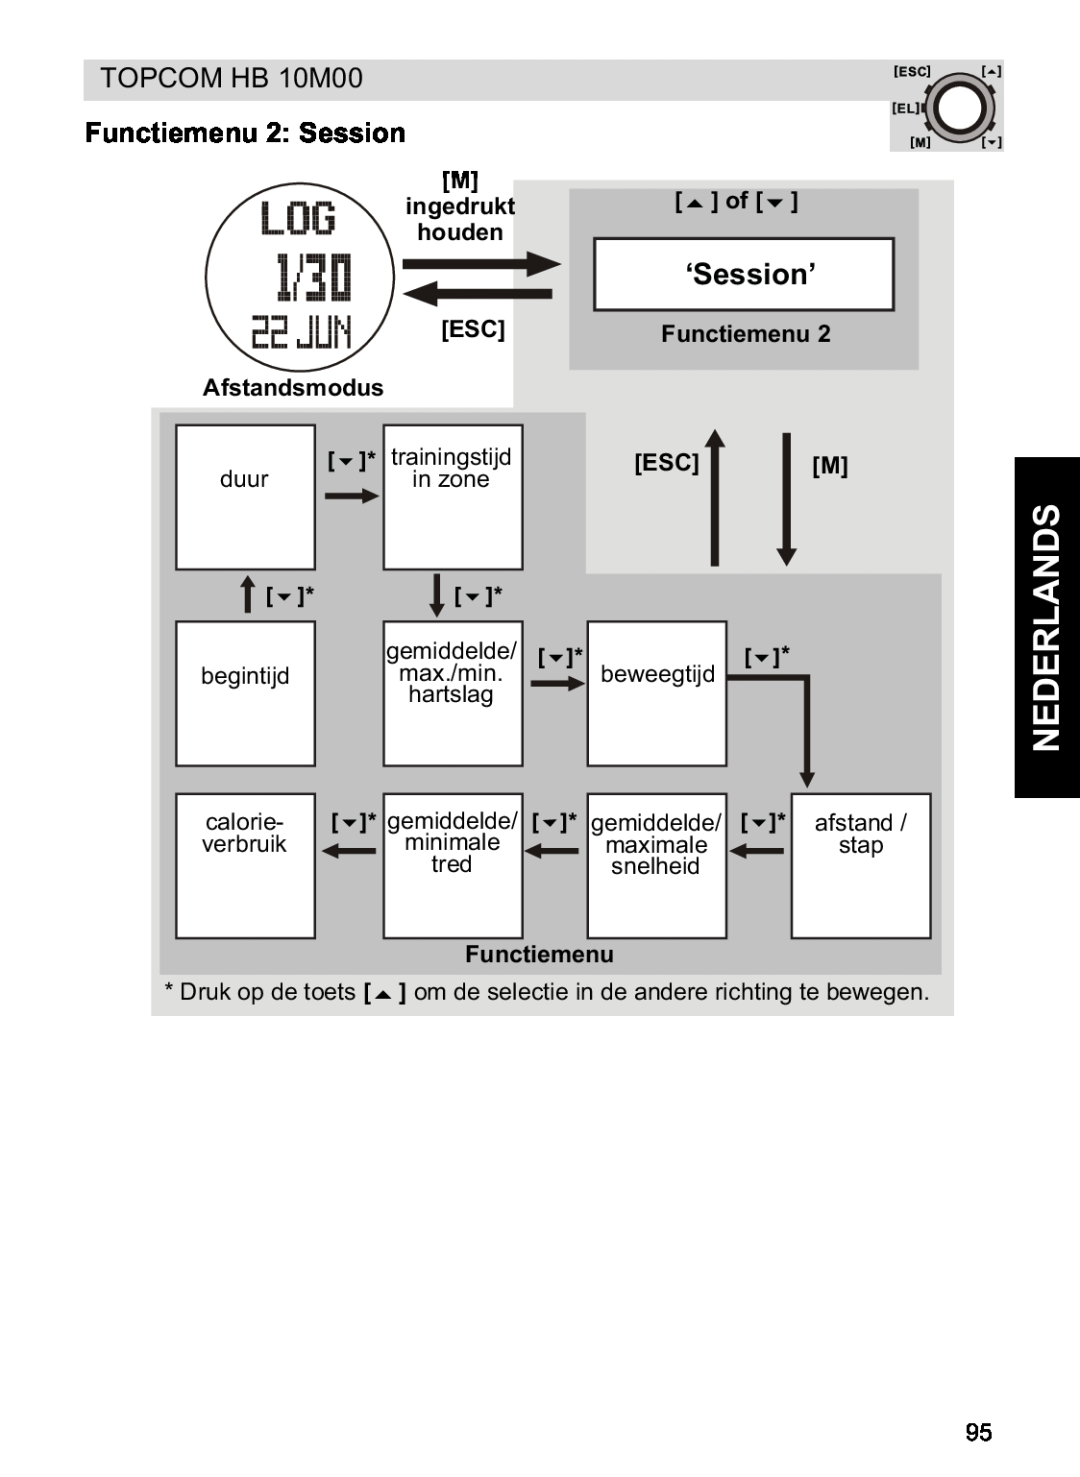 Topcom HB 10M00 manual Functiemenu 2 Session, Nederlands, ‘Session’ 